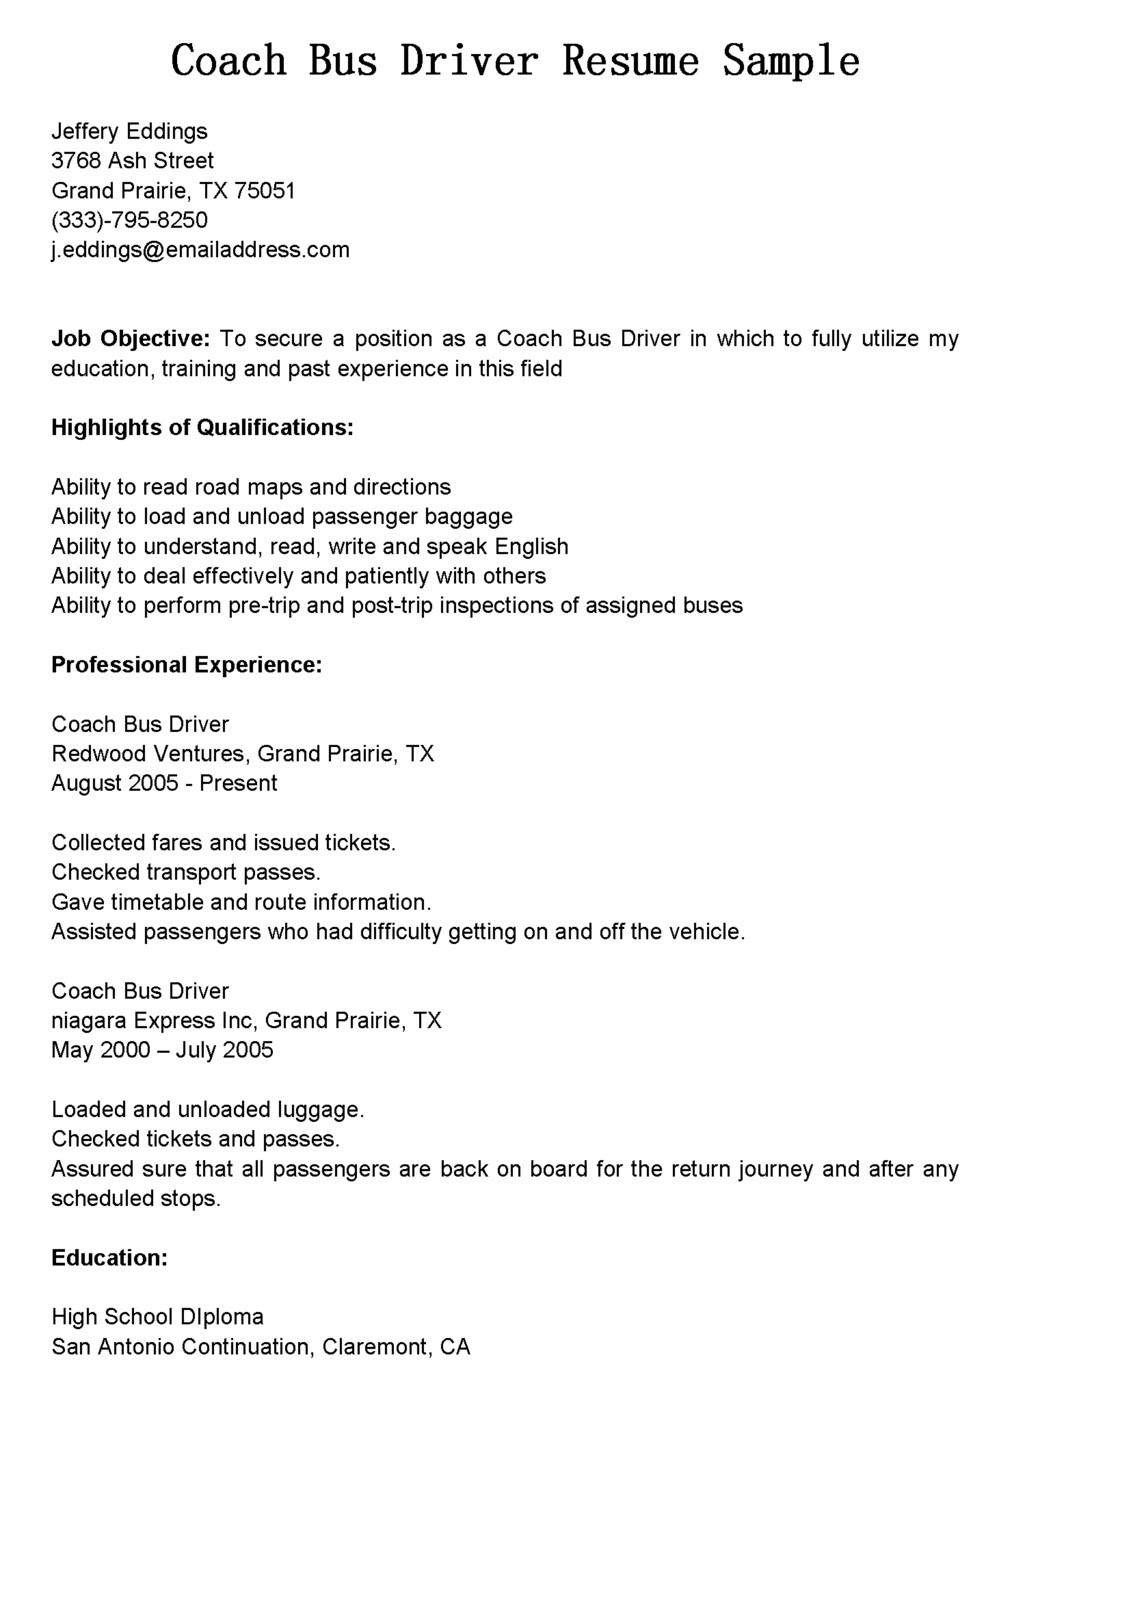 Sample Resume for Bus Driver Position Sample Resume for Personal Driver Position